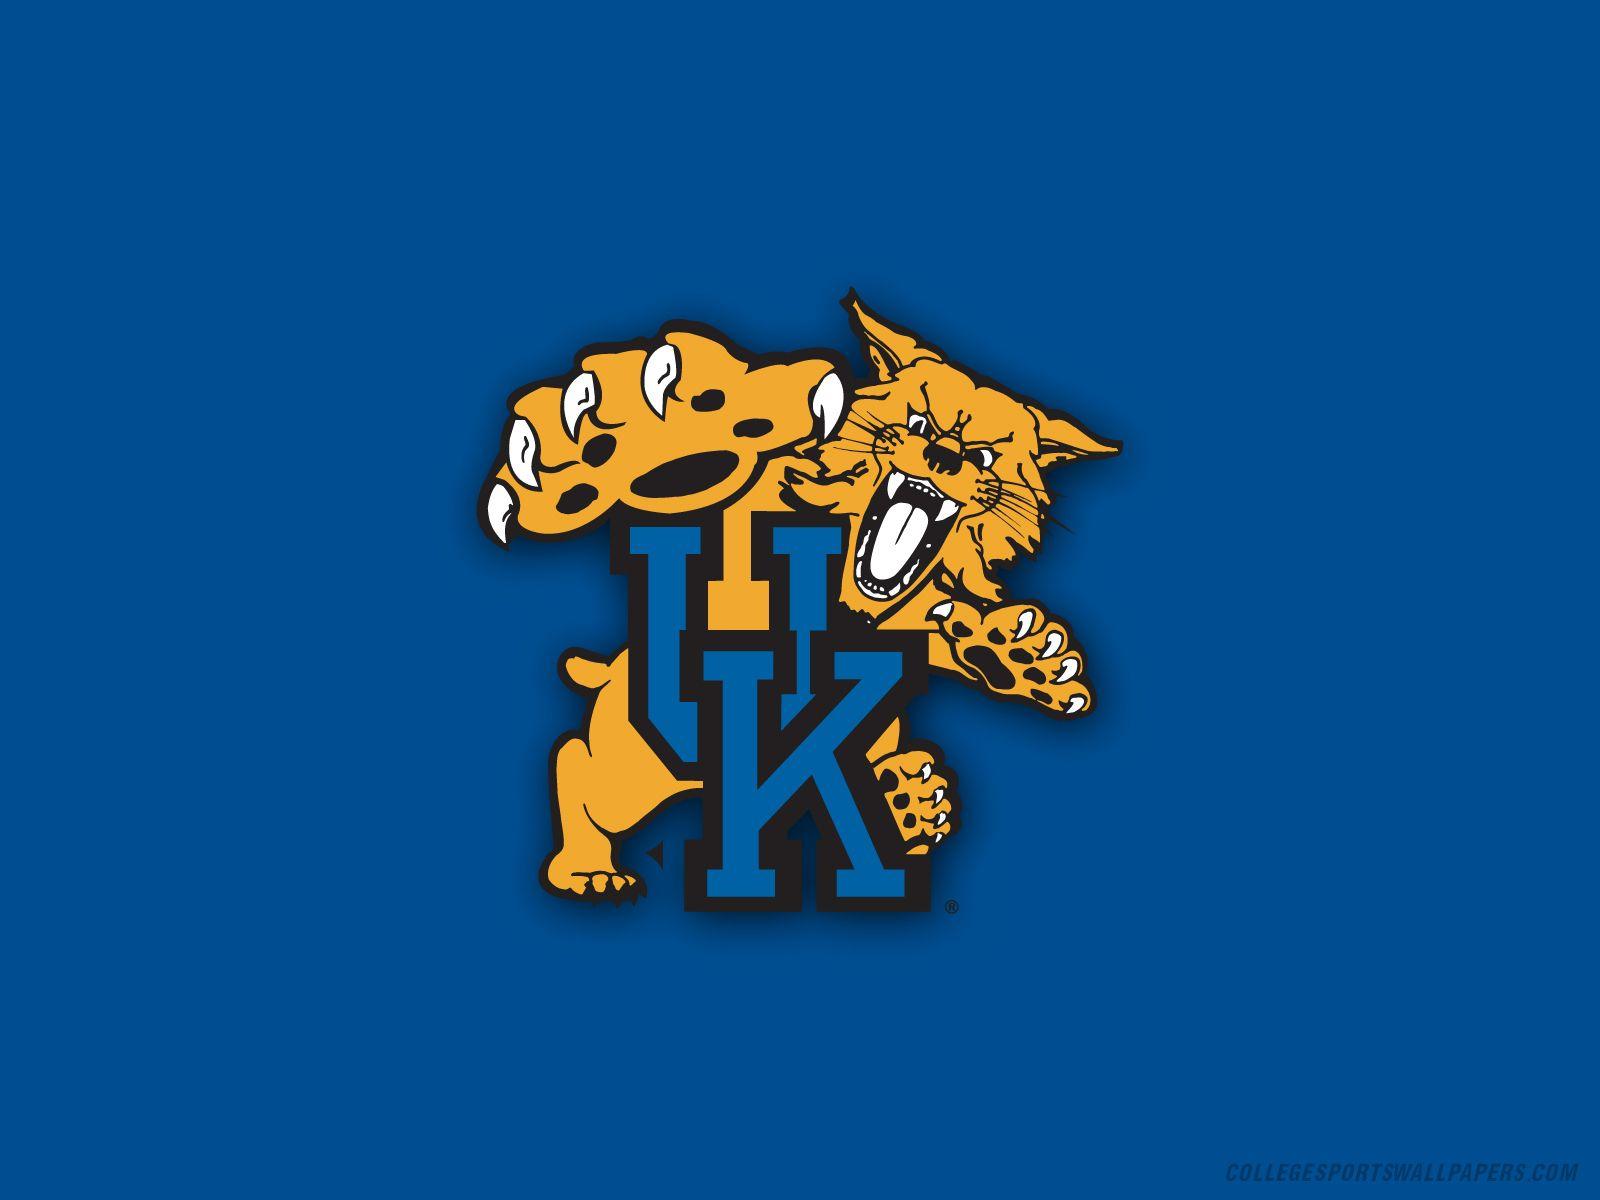 Kentucky Wildcats image Uk logo HD wallpaper and background